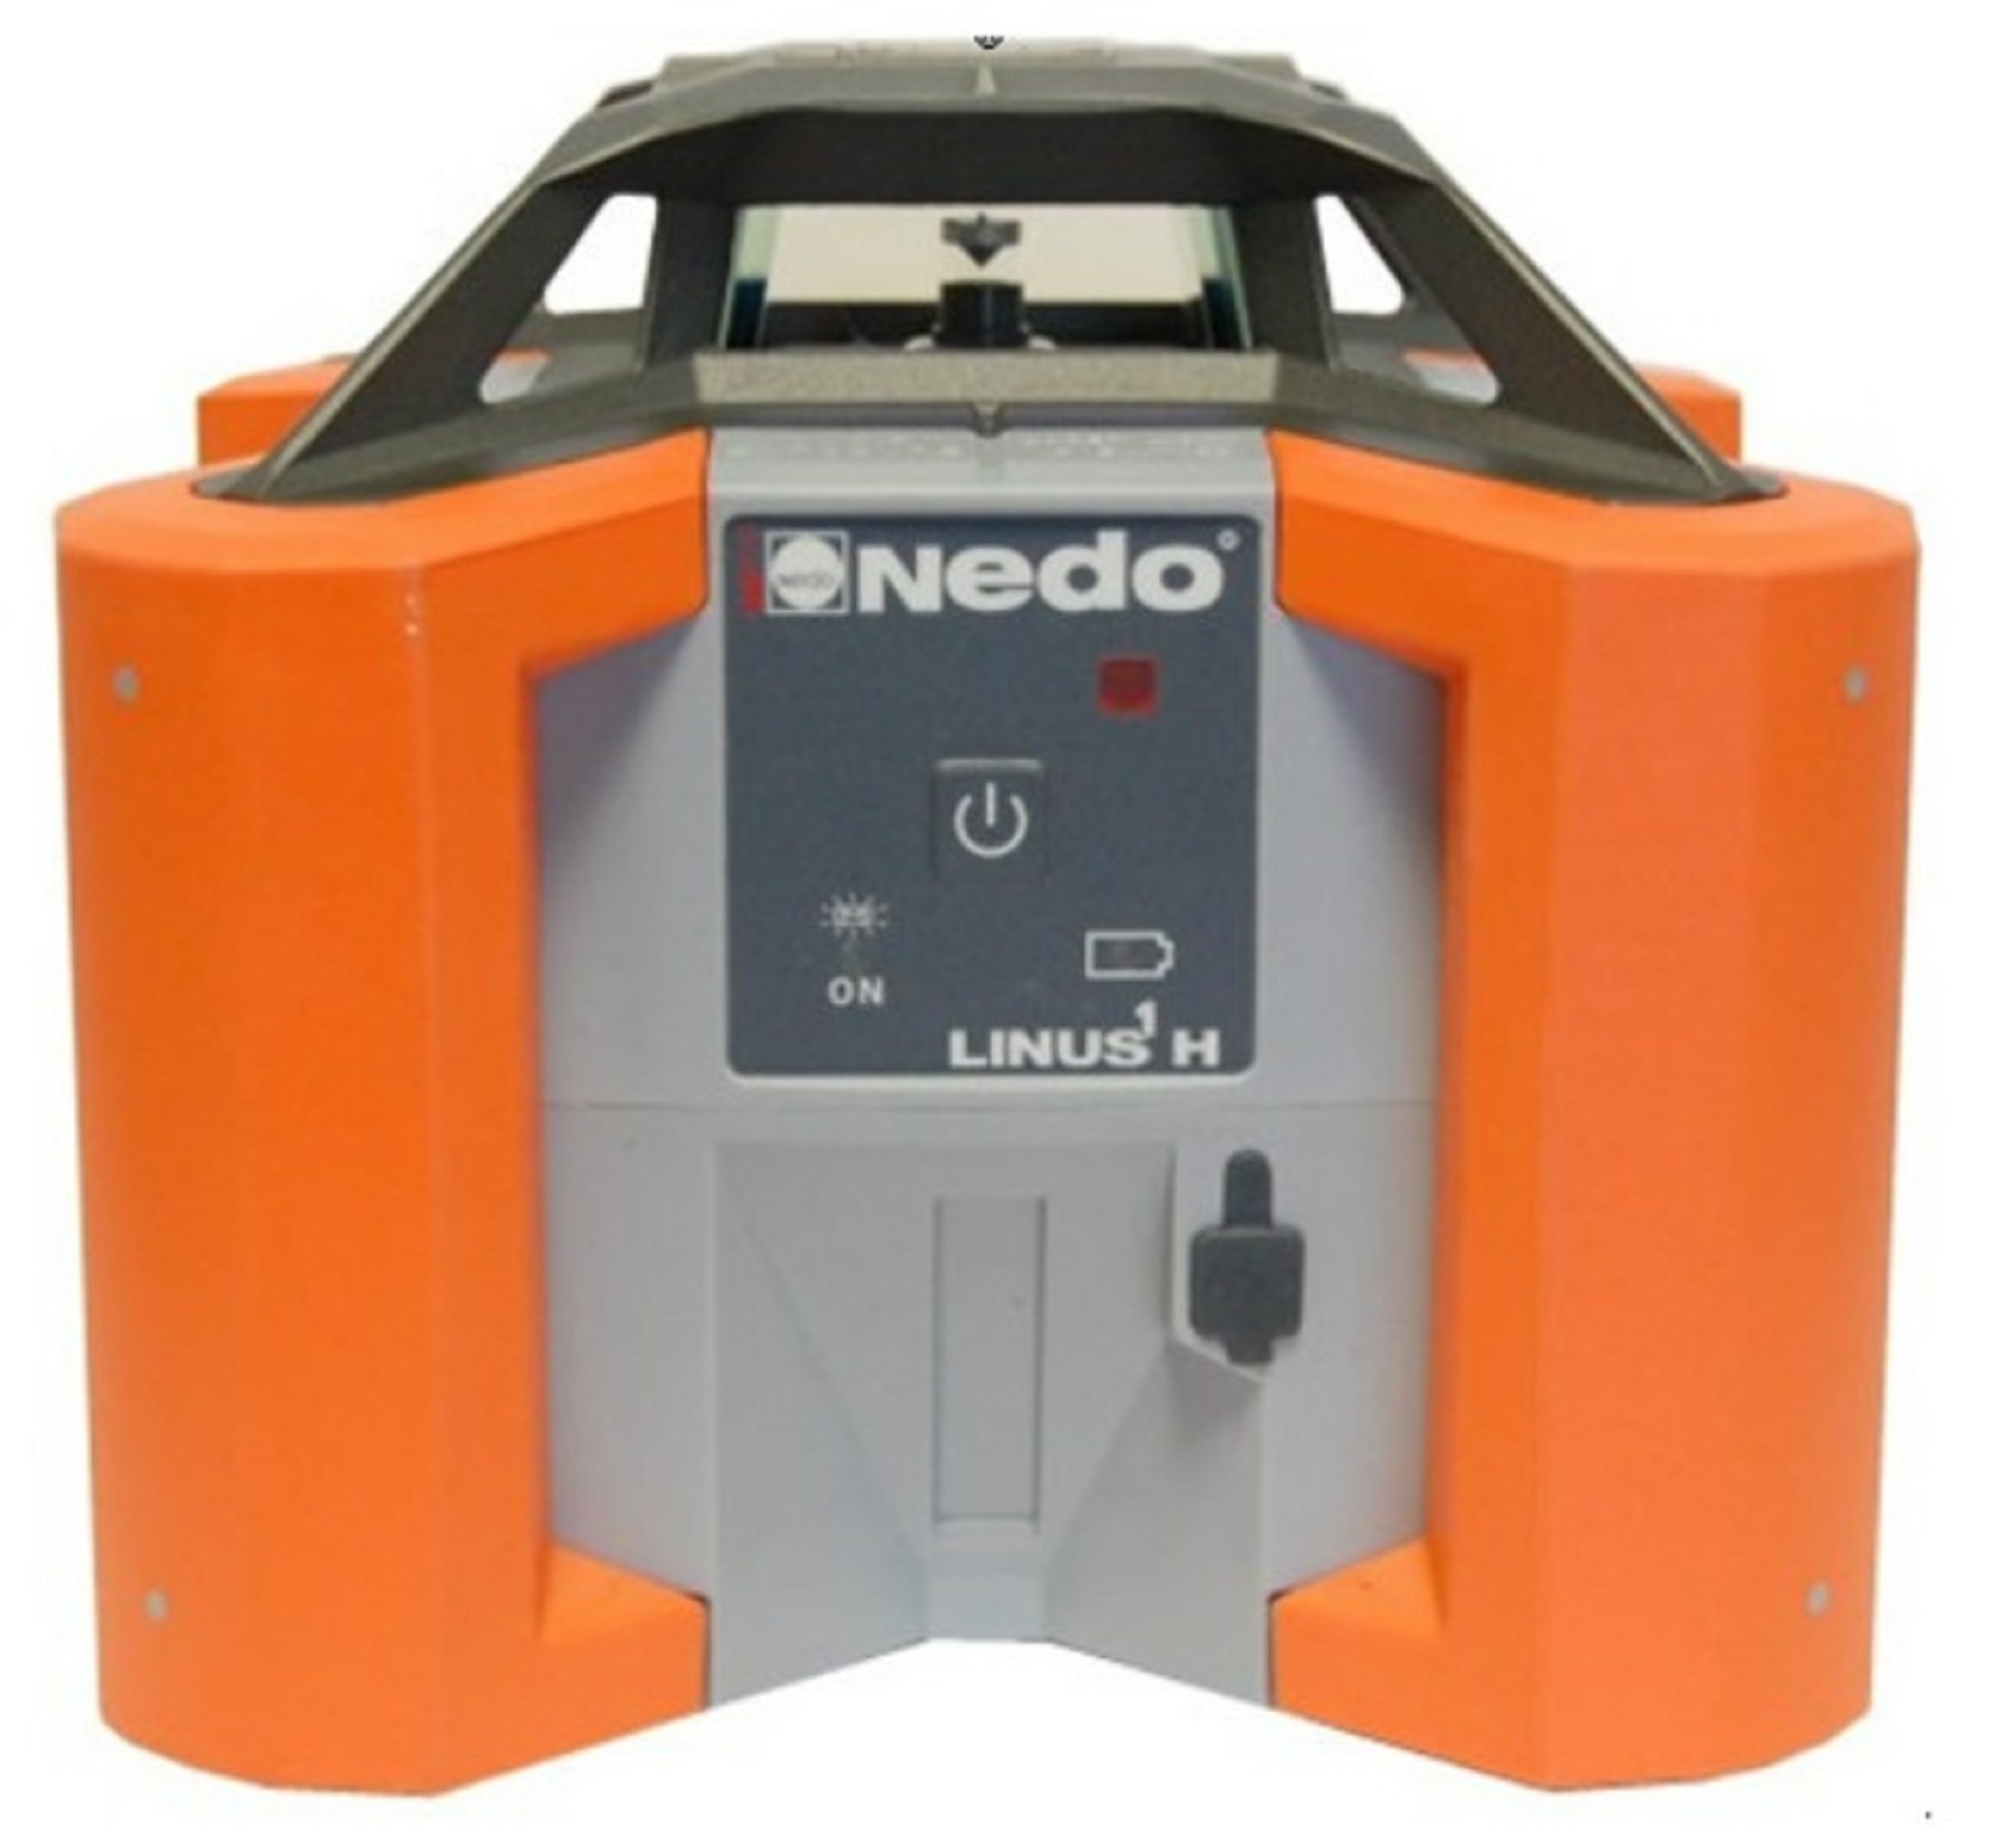 Nedo Linus1 H - horizontale laser